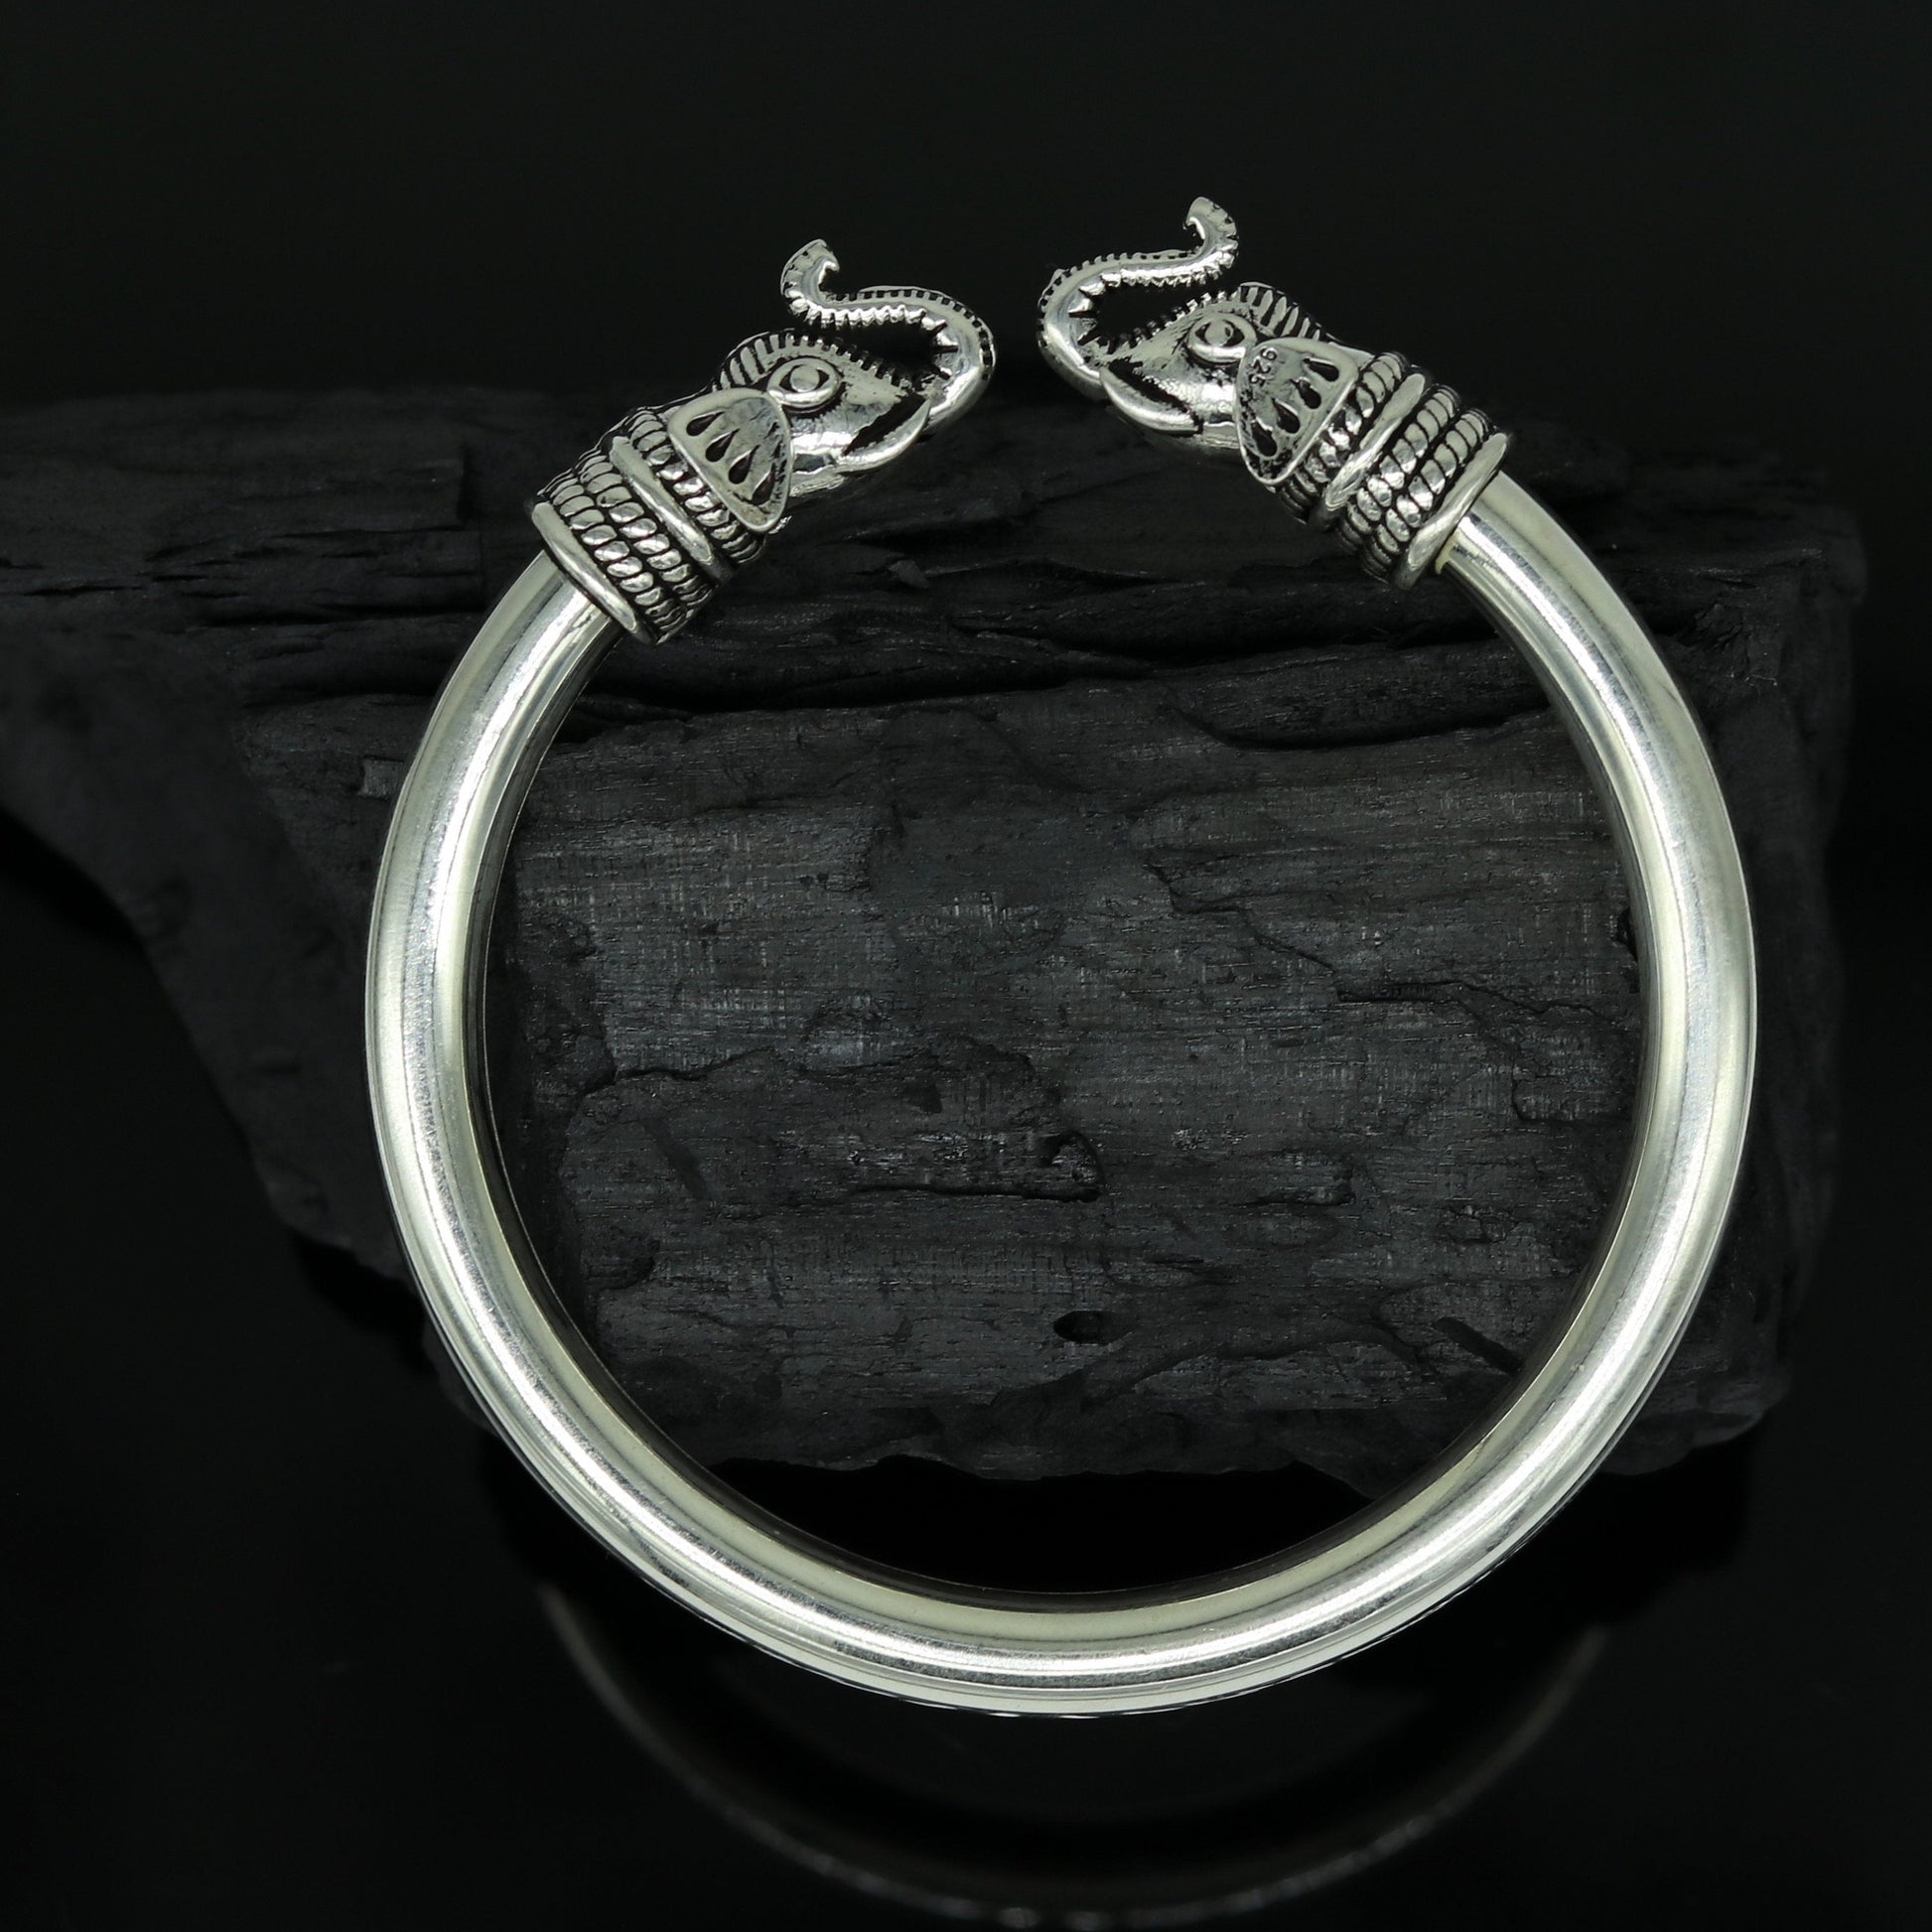 925 sterling silver handmade gorgeous hip-hop elephant design bangle bracelet kada, fabulous unisex gifting personalized jewelry nssk32 - TRIBAL ORNAMENTS